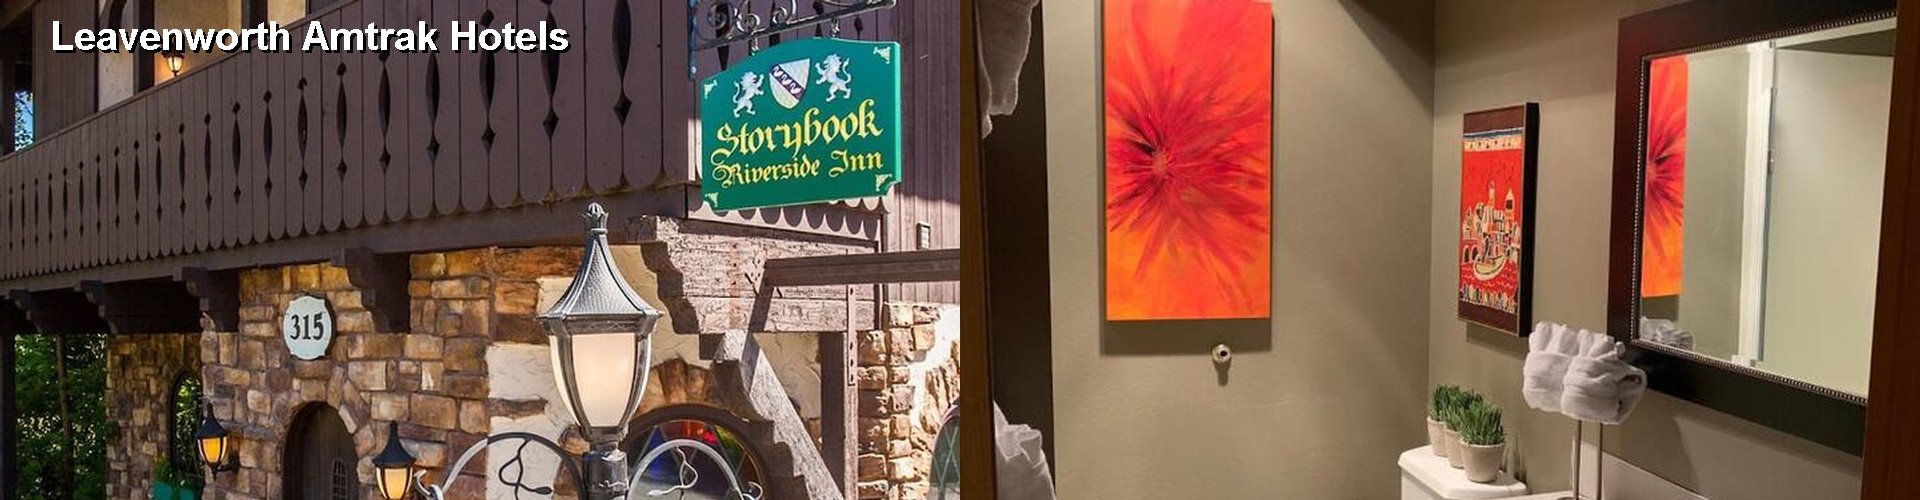 5 Best Hotels near Leavenworth Amtrak